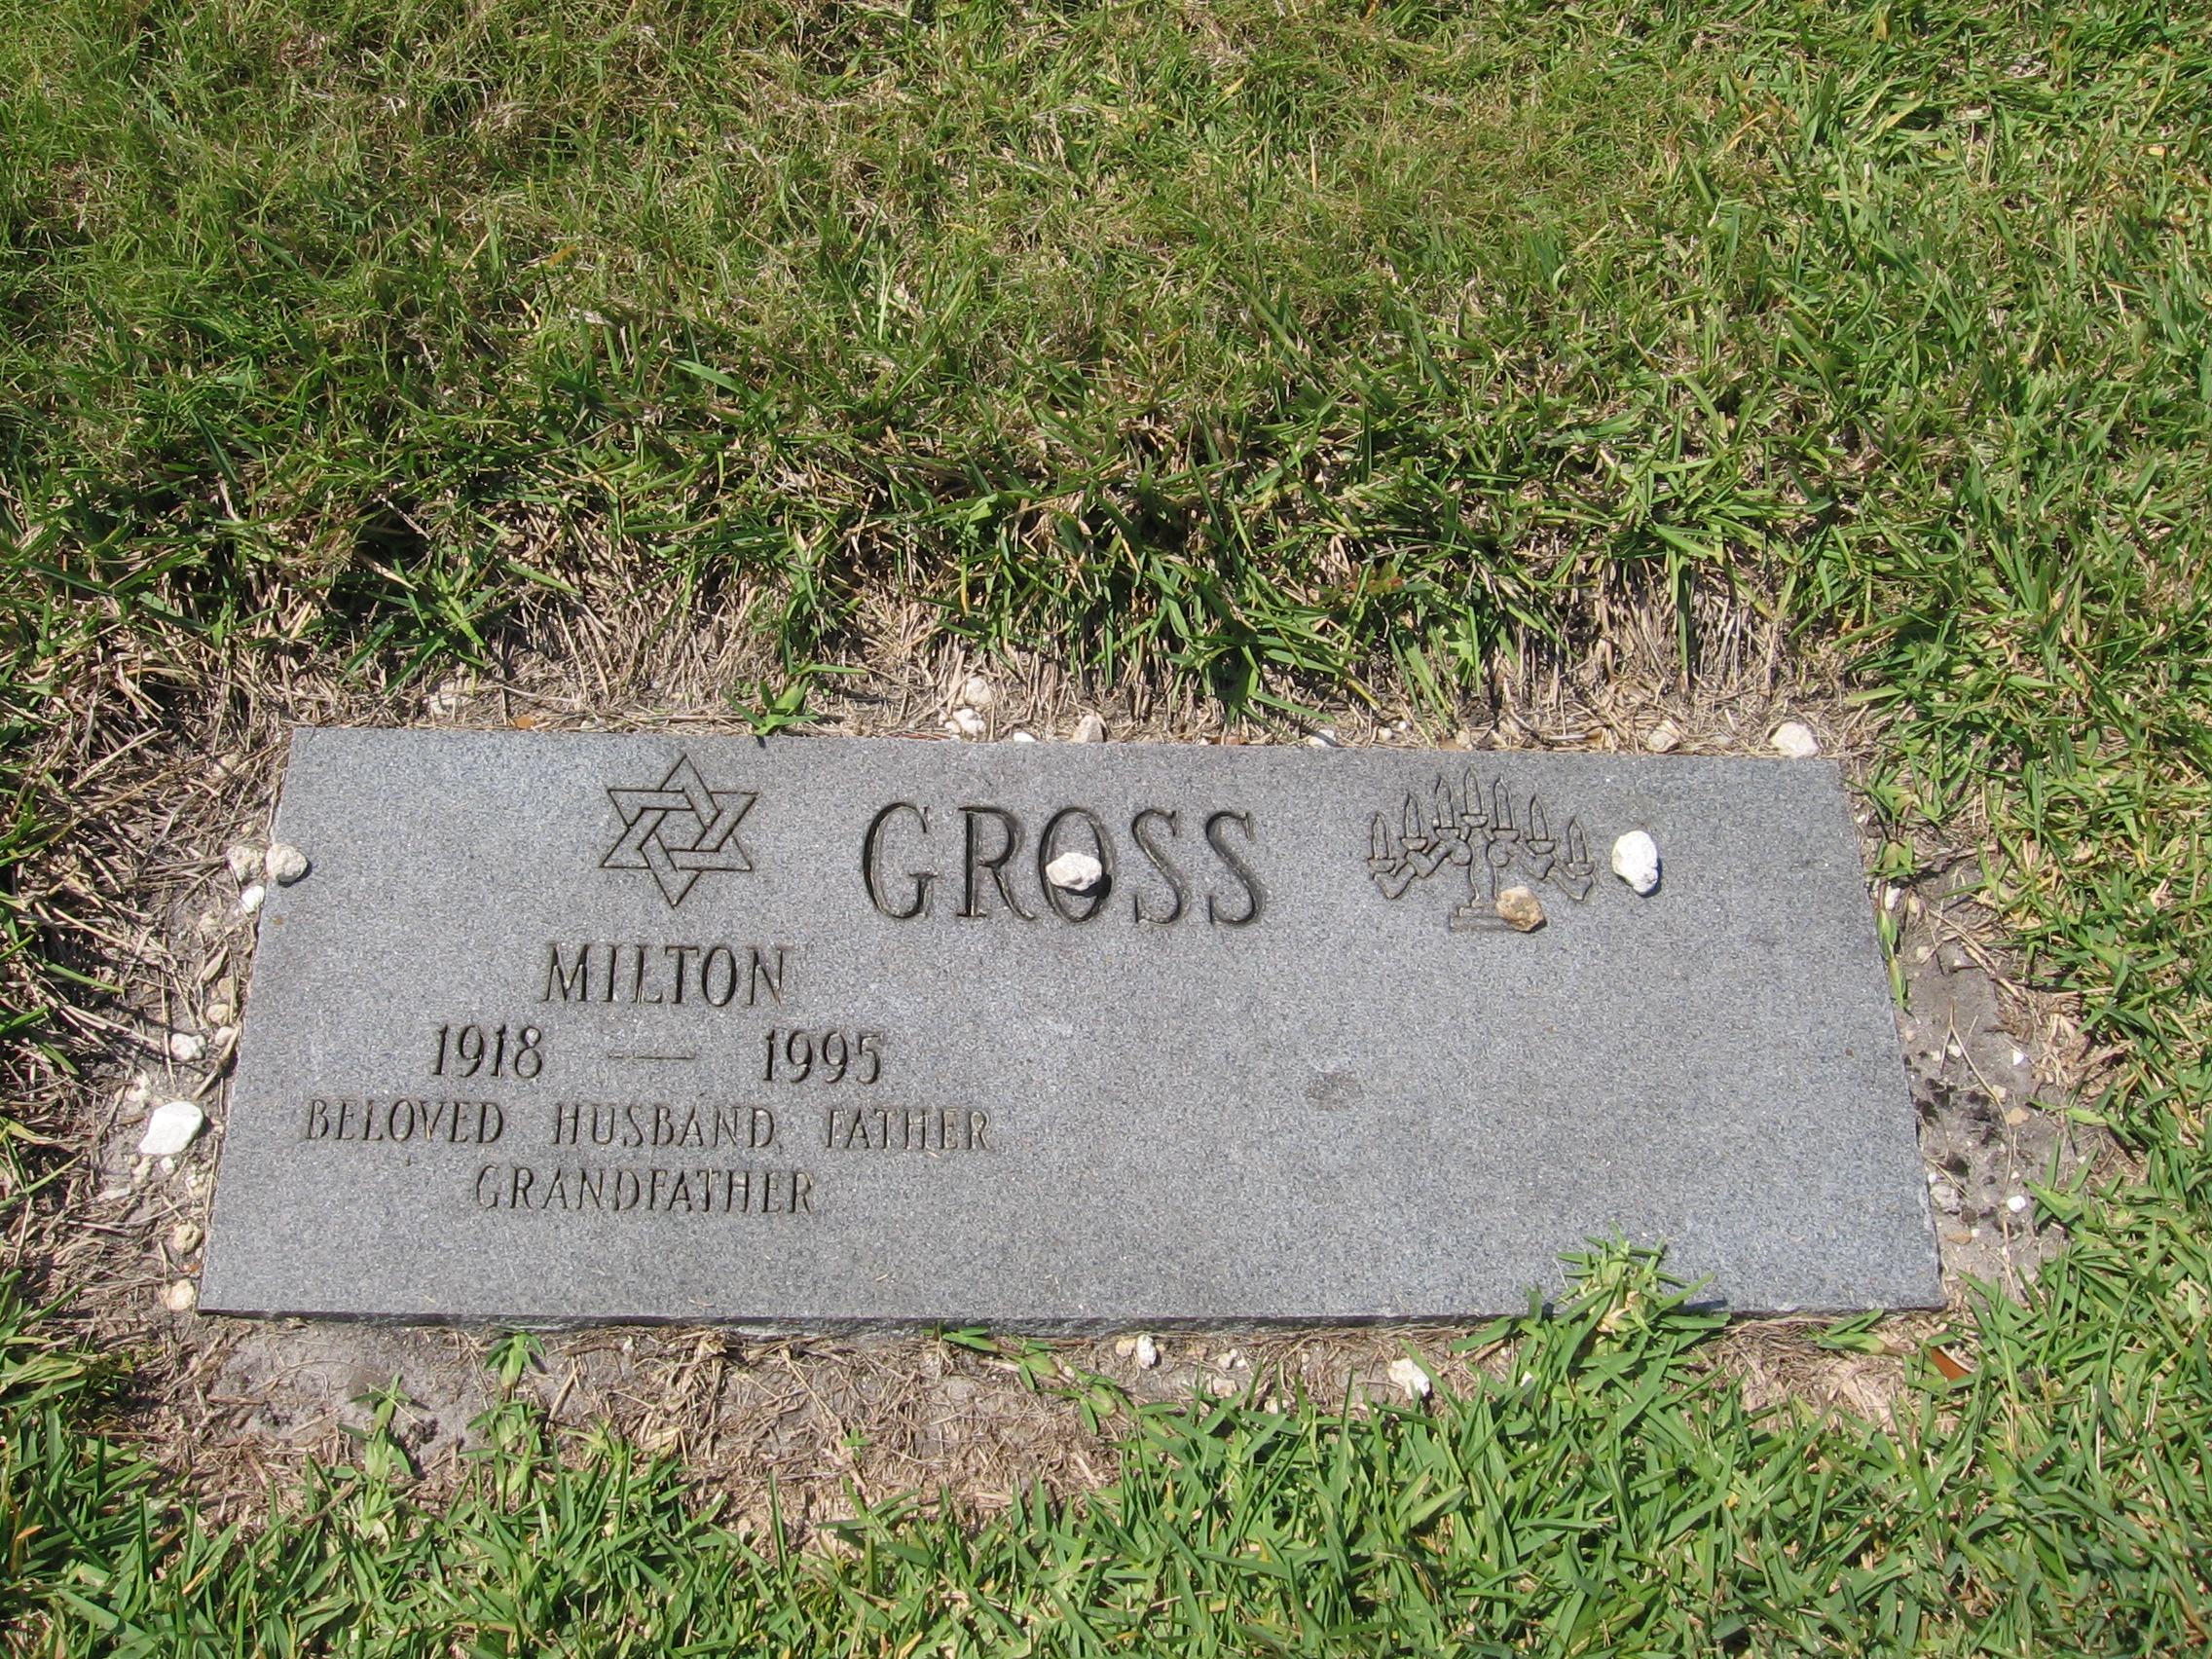 Milton Gross